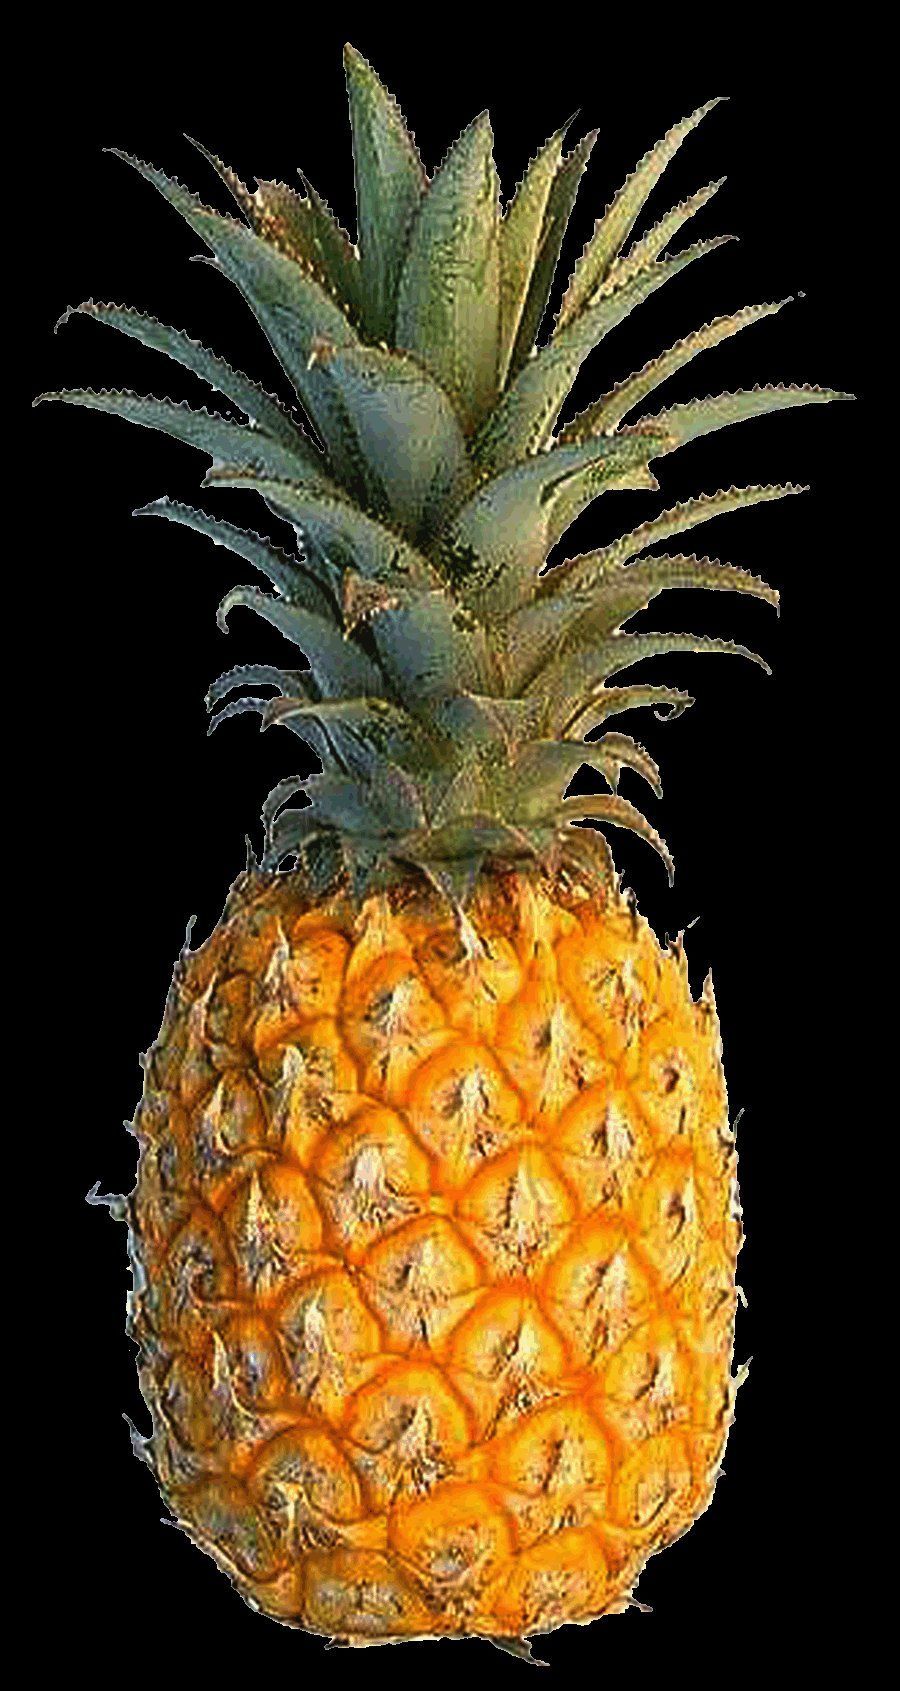 Pineapple aesthetic Wallpaper Download